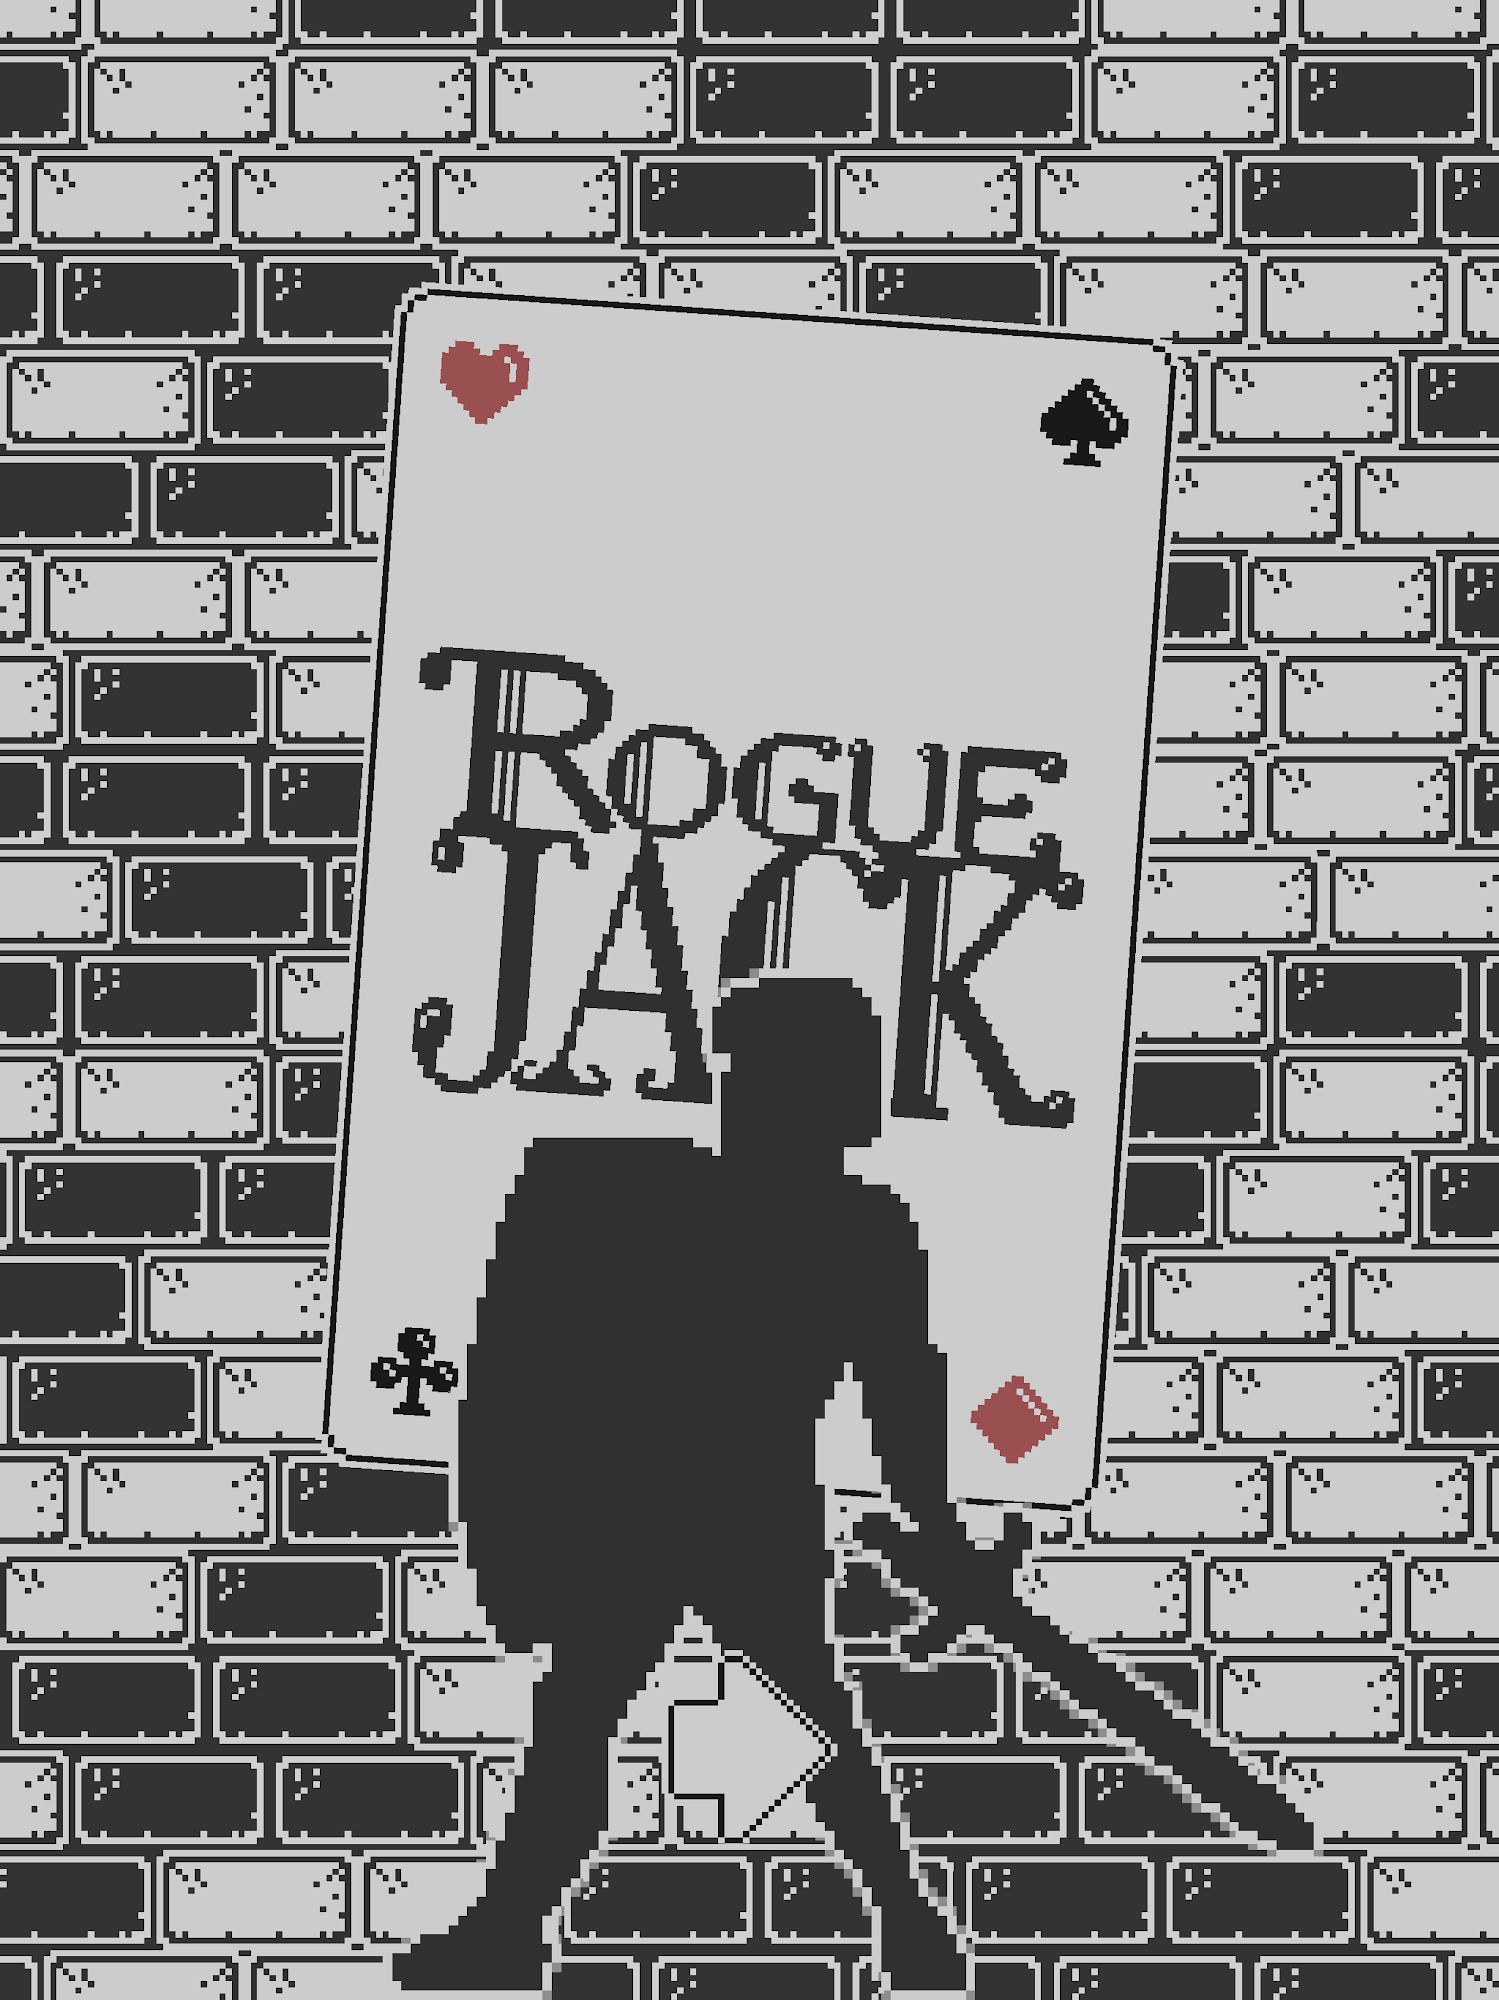 Descargar RogueJack: Roguelike BlackJack gratis para Android.